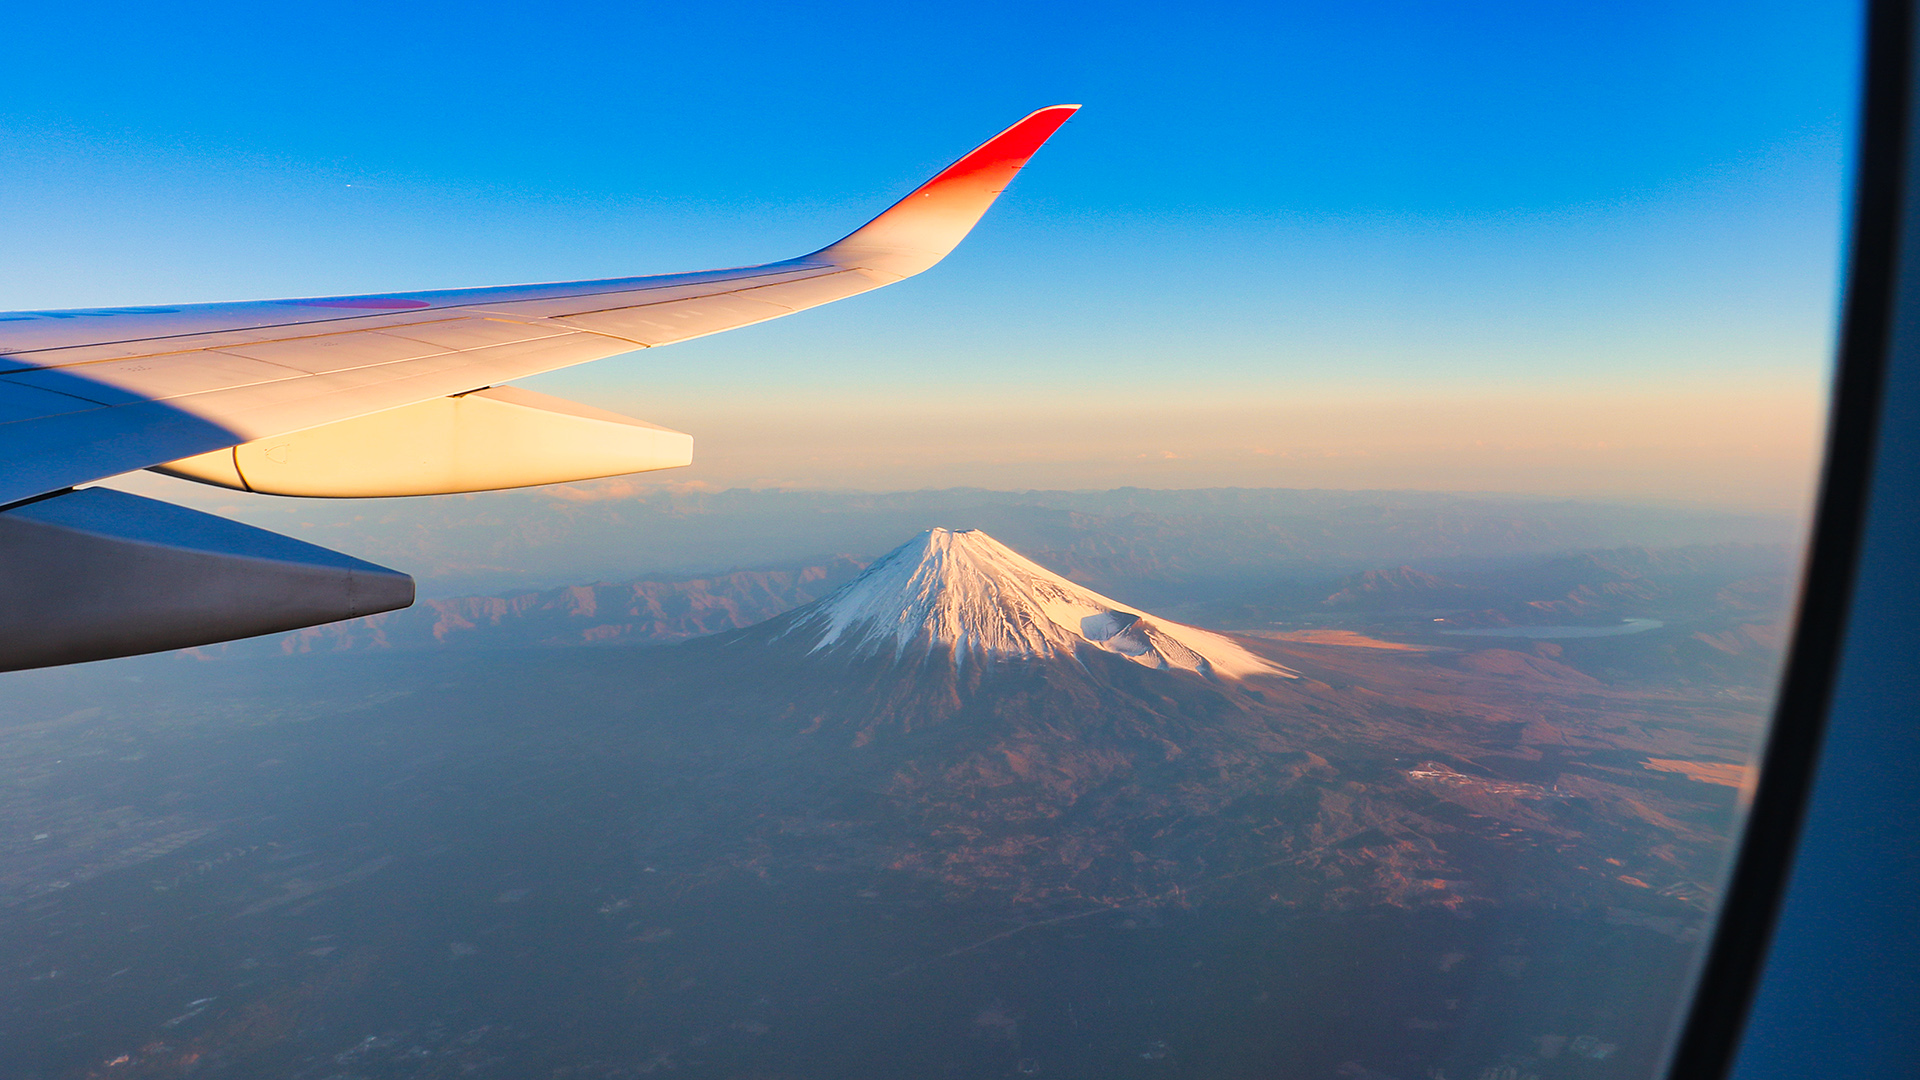 JAL】羽田空港発着の遊覧チャーター「初日の出 初富士フライト」を実施 